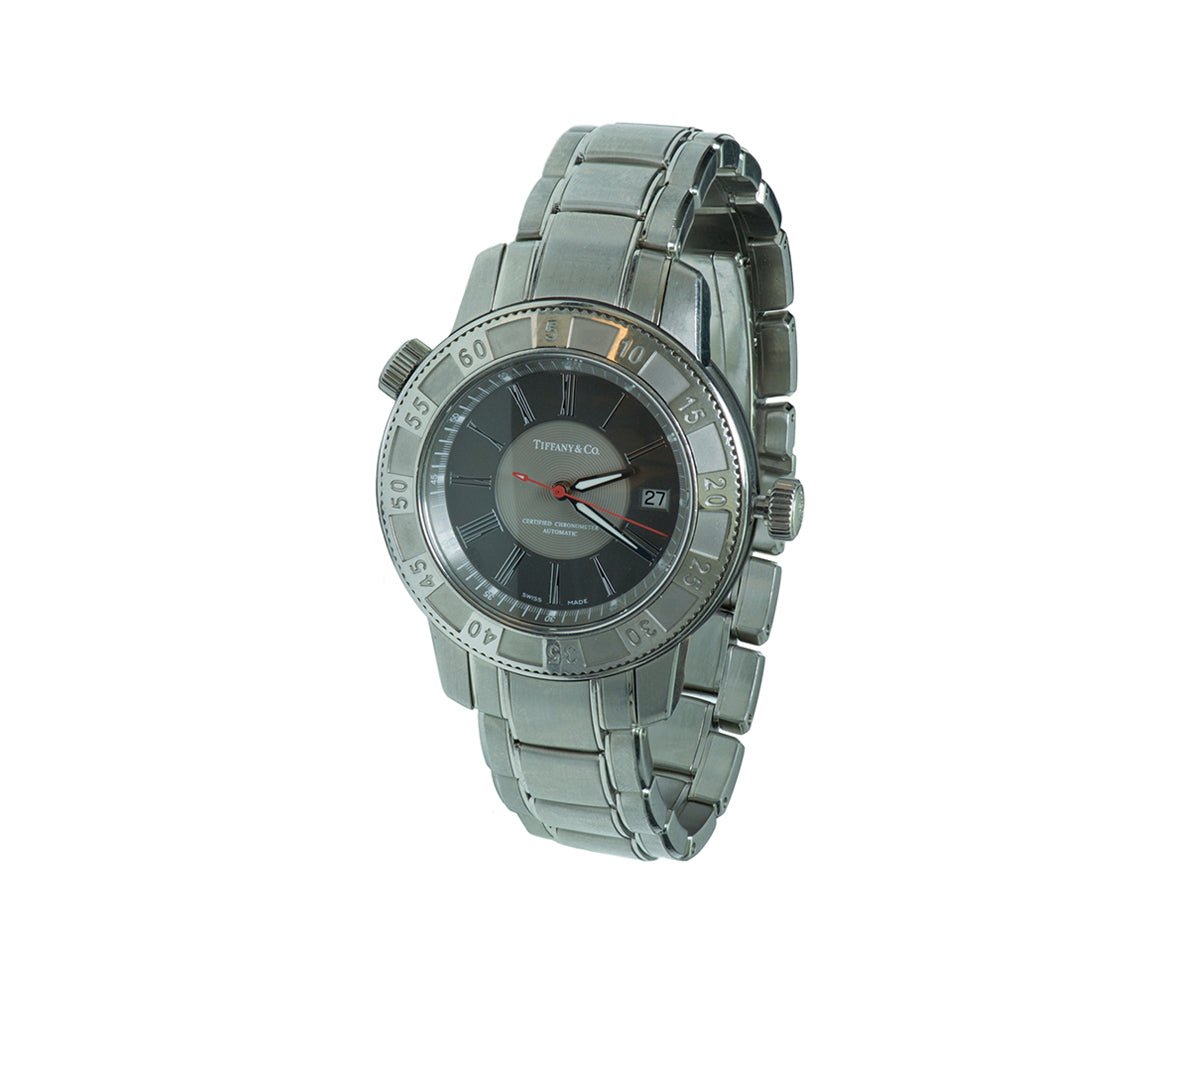 Tiffany & Co. Mark T-57 Automatic Men's Watch